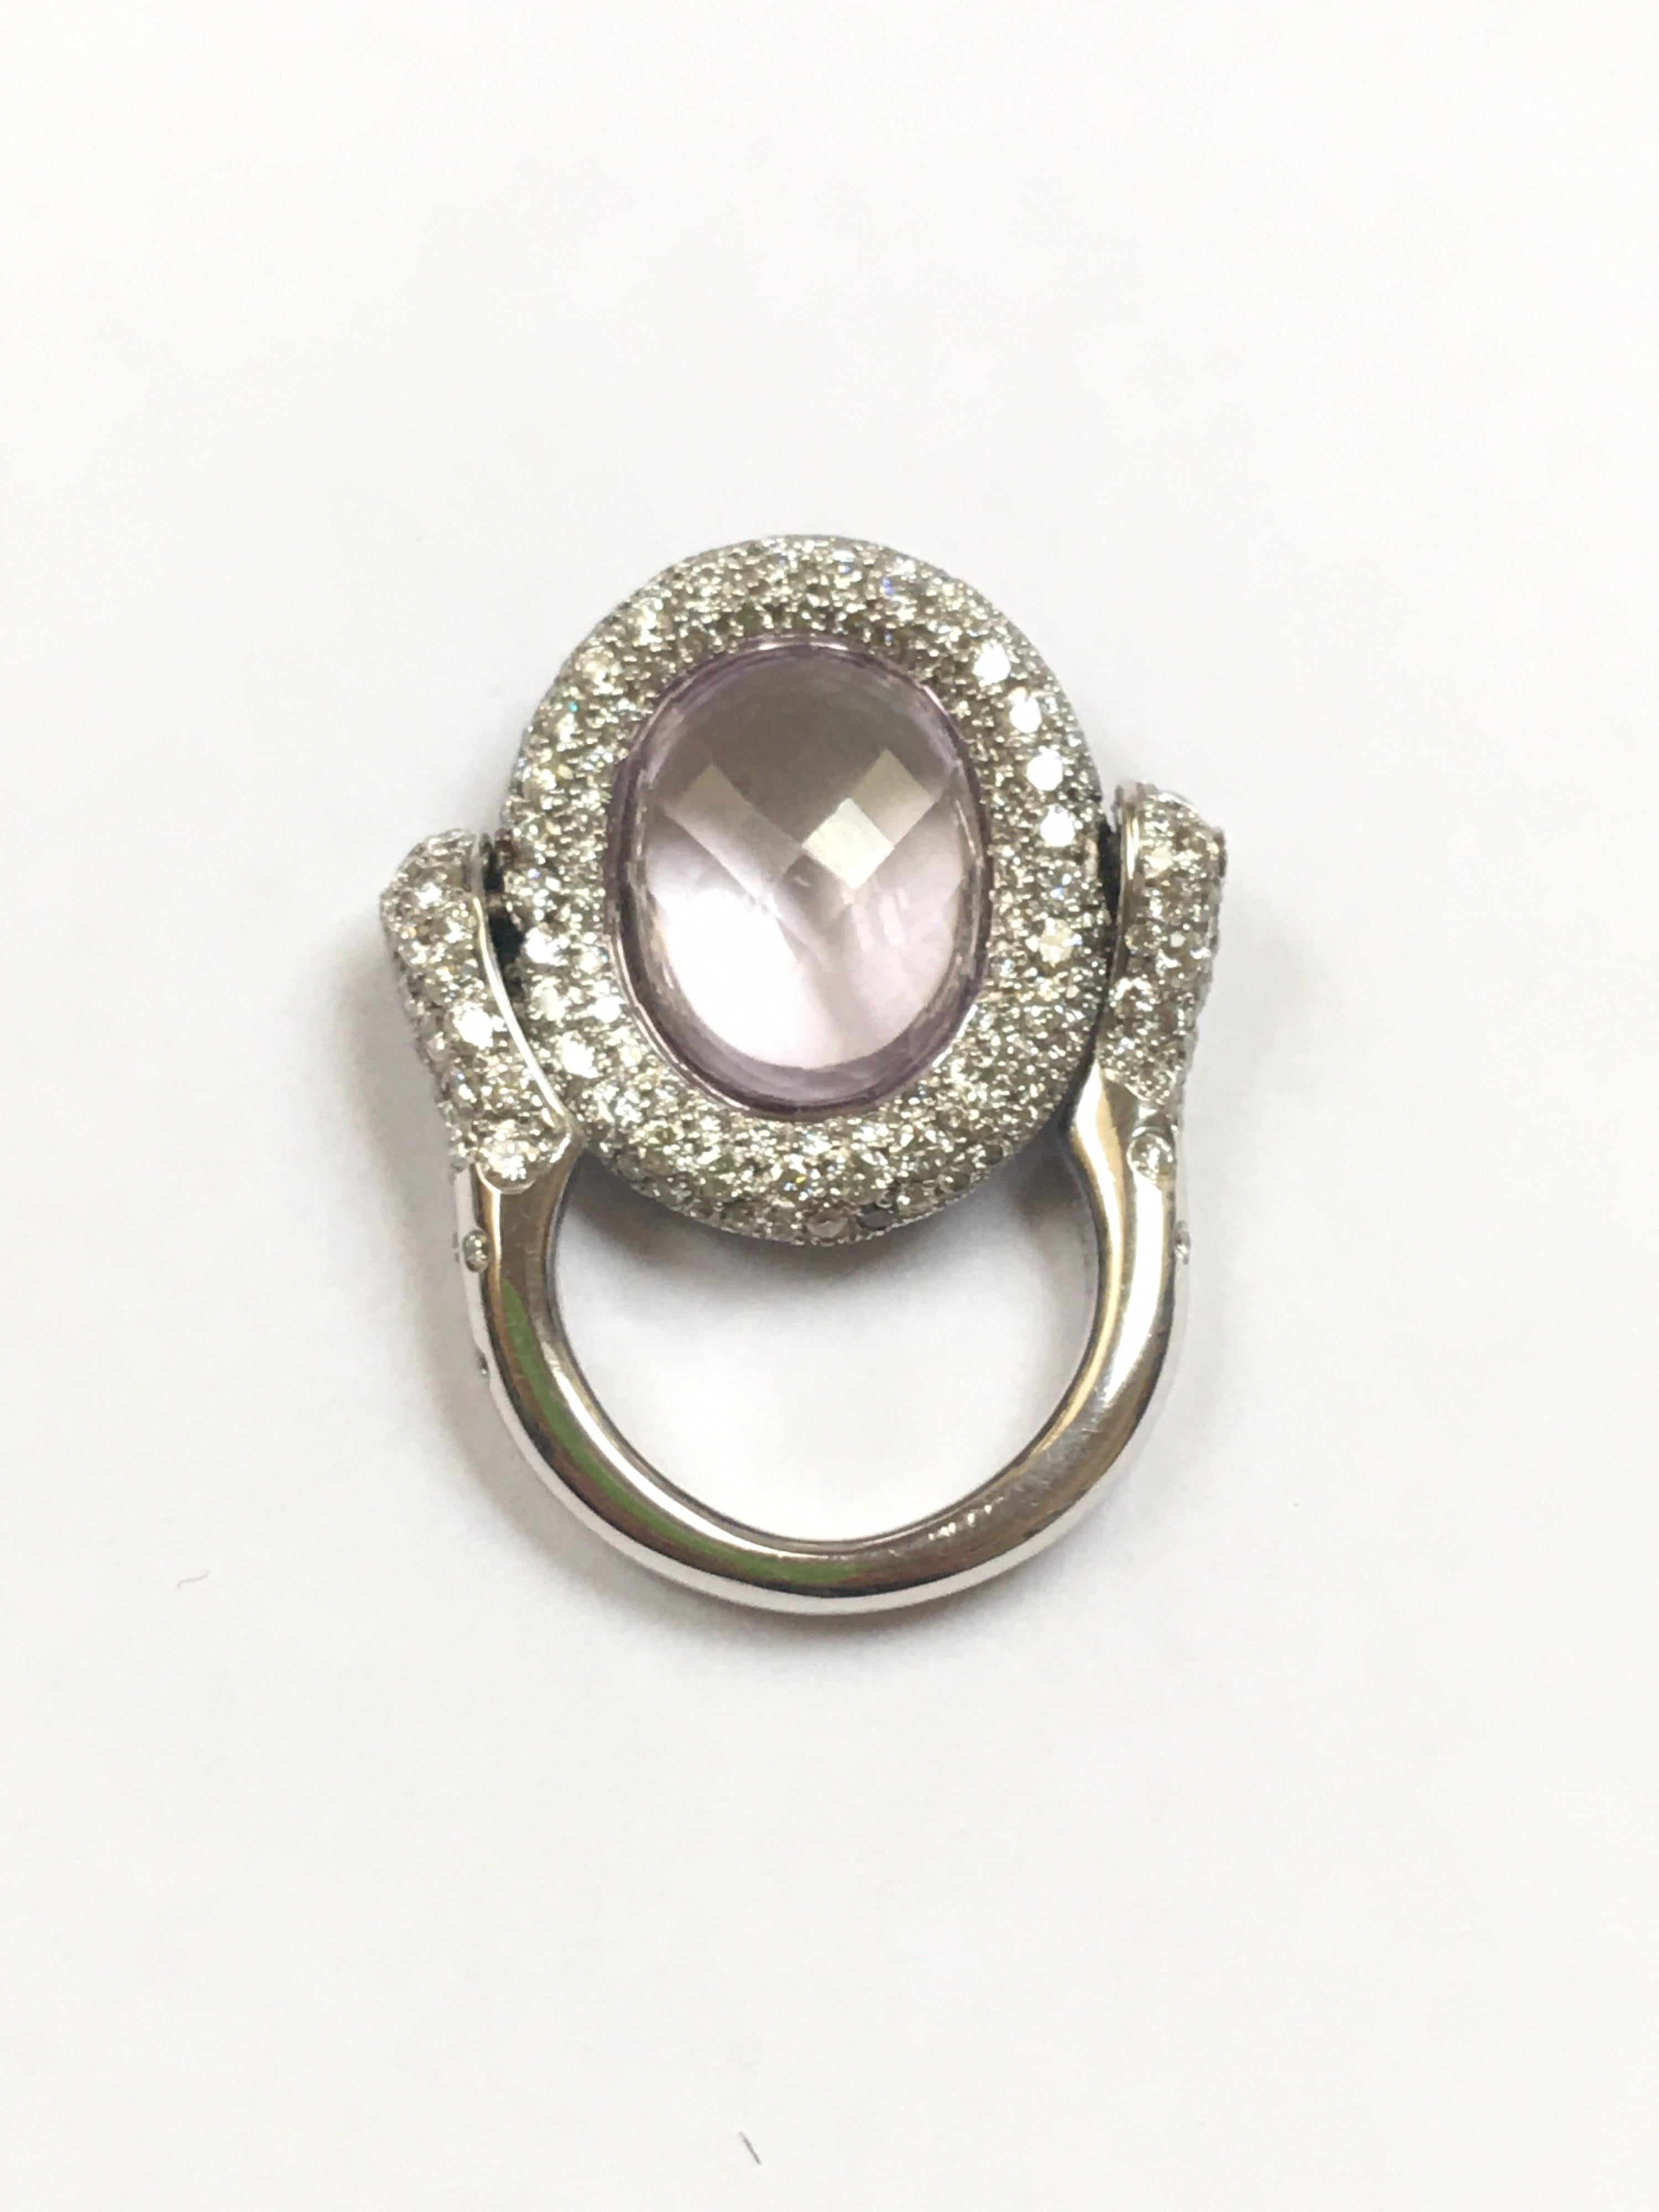 Diamond Sapphire Kunzite Rotating Ring de Grisogono 18 Karat White Gold 6